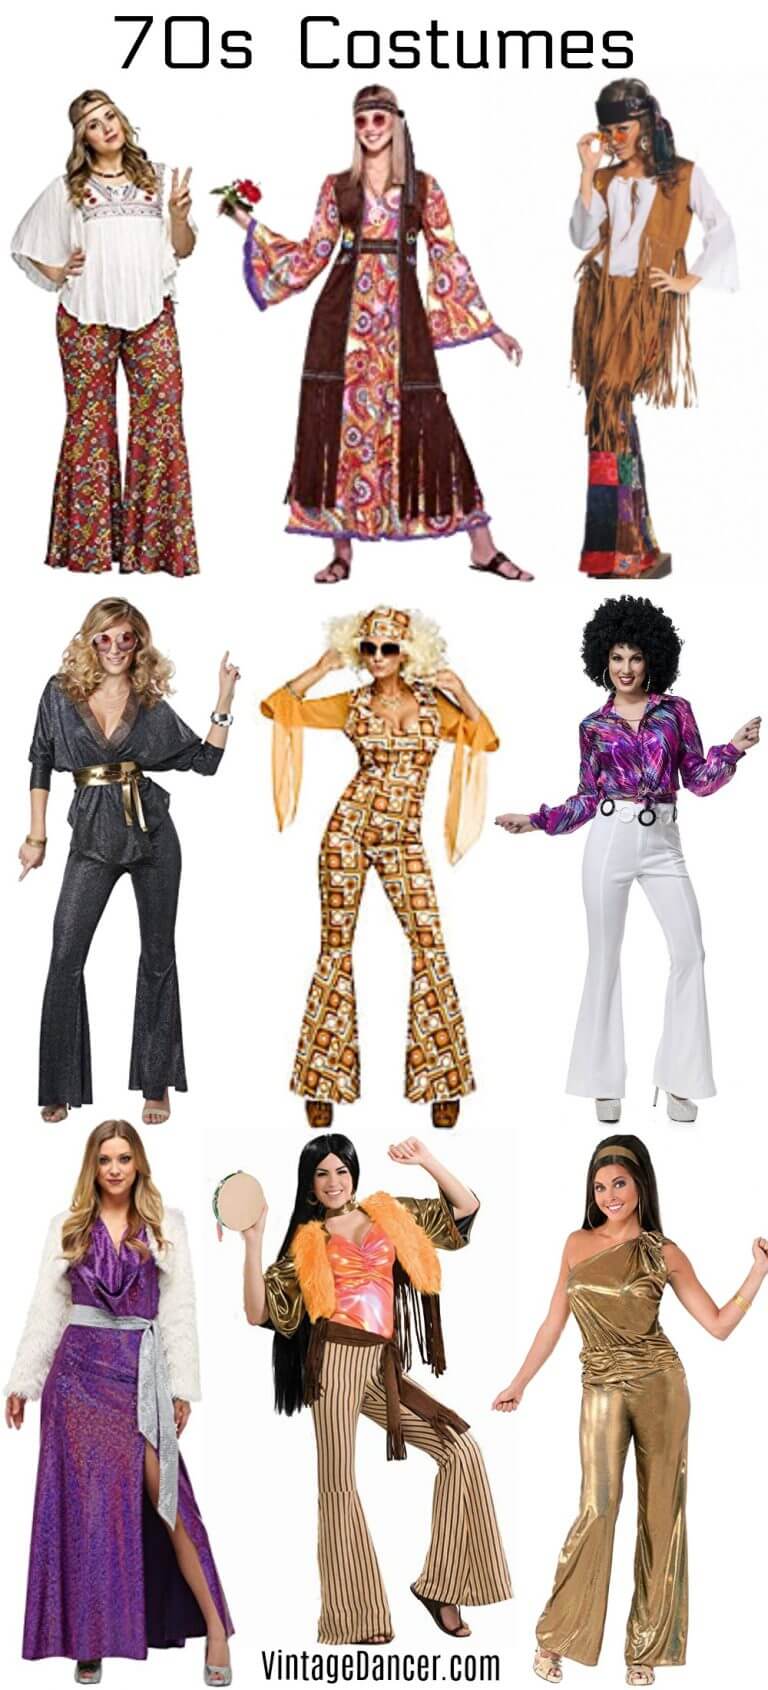 Мода 70-х: как одевались женщины в 1970-х годах